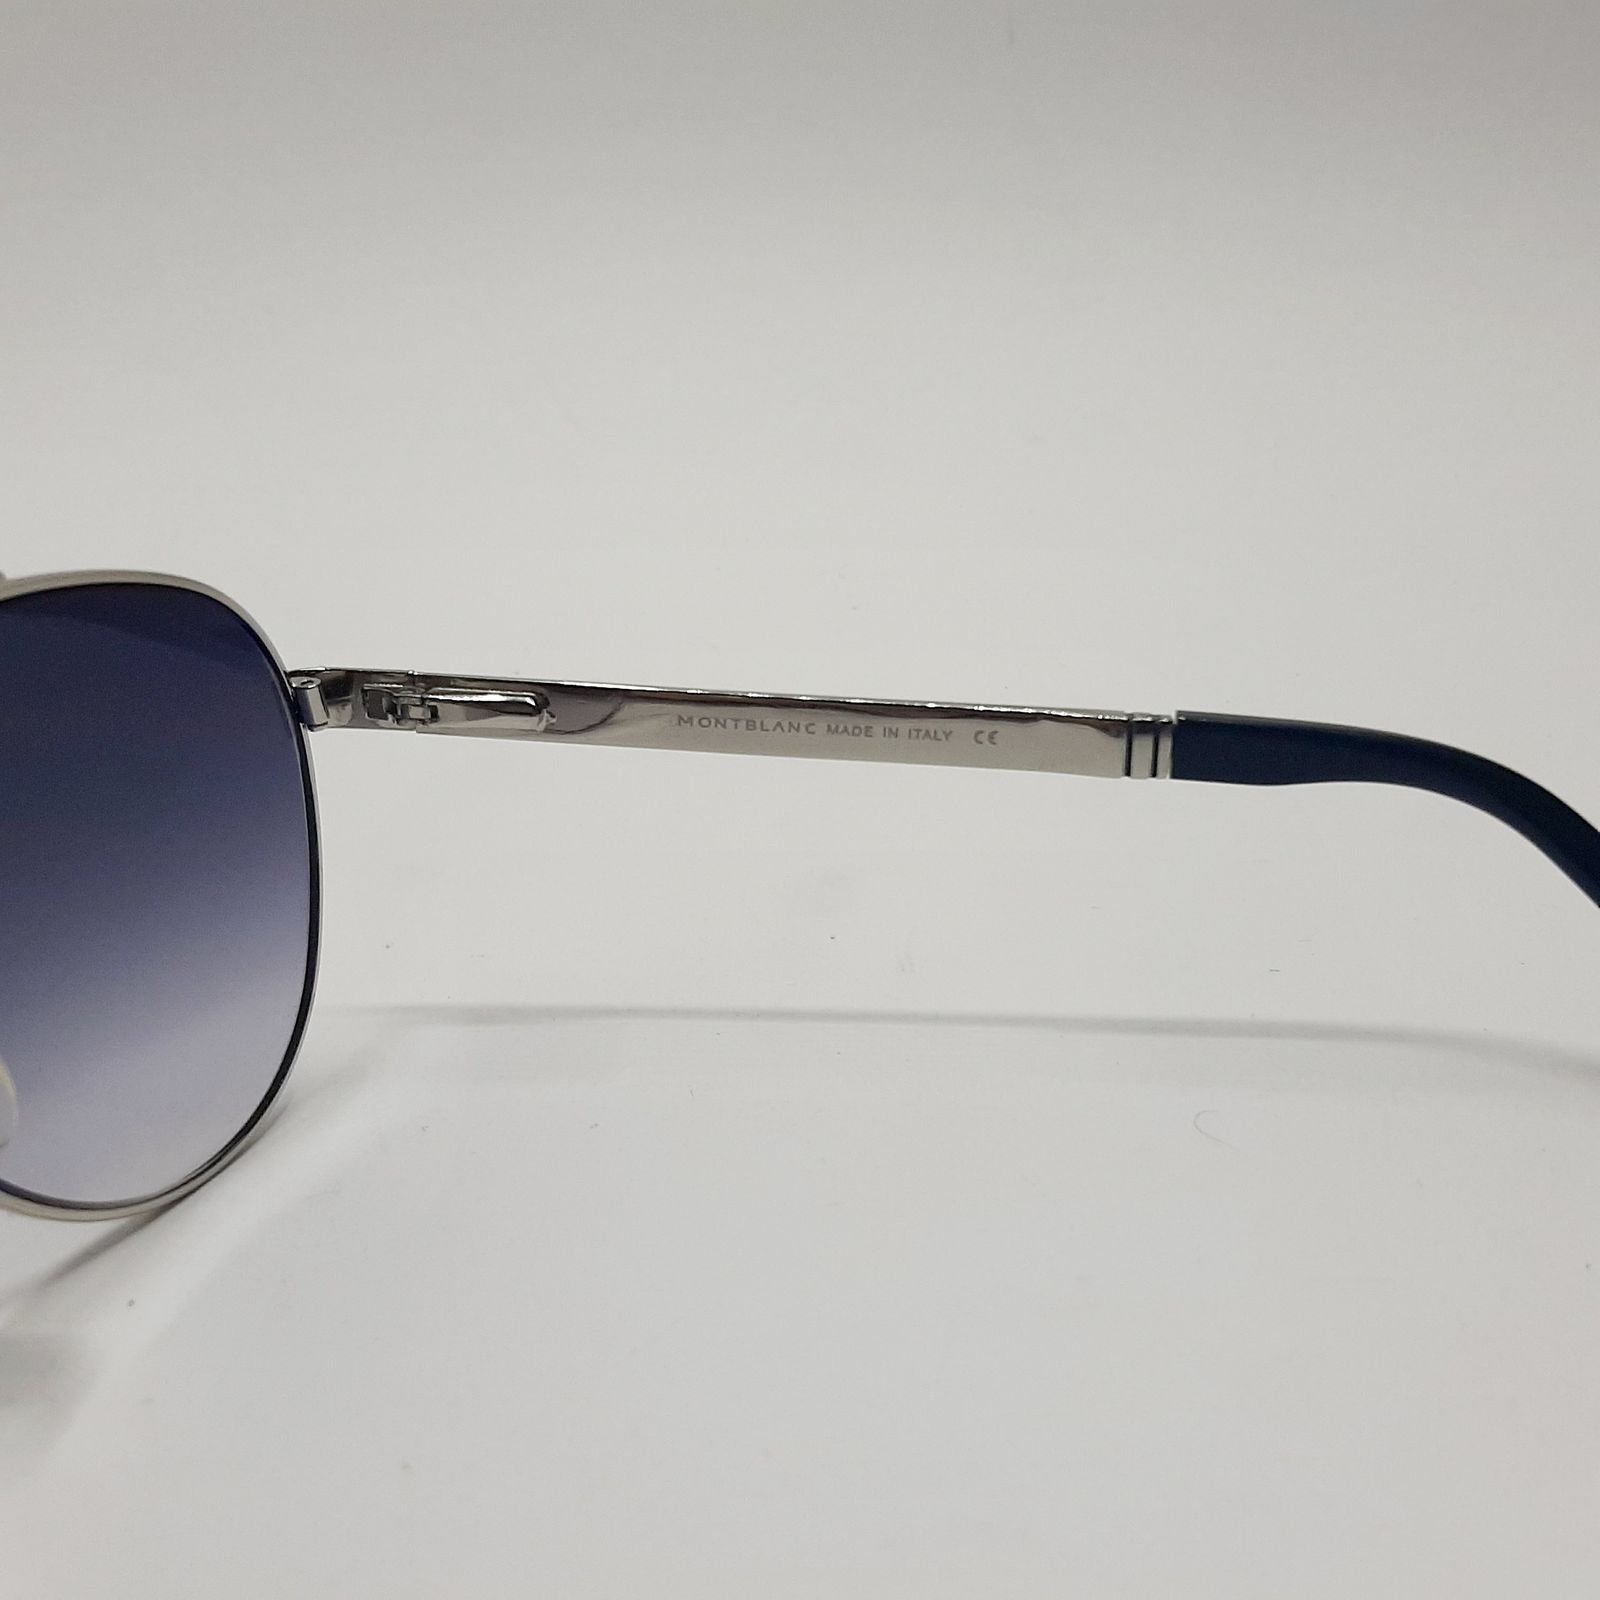 عینک آفتابی مون بلان مدل MB904c05 -  - 7